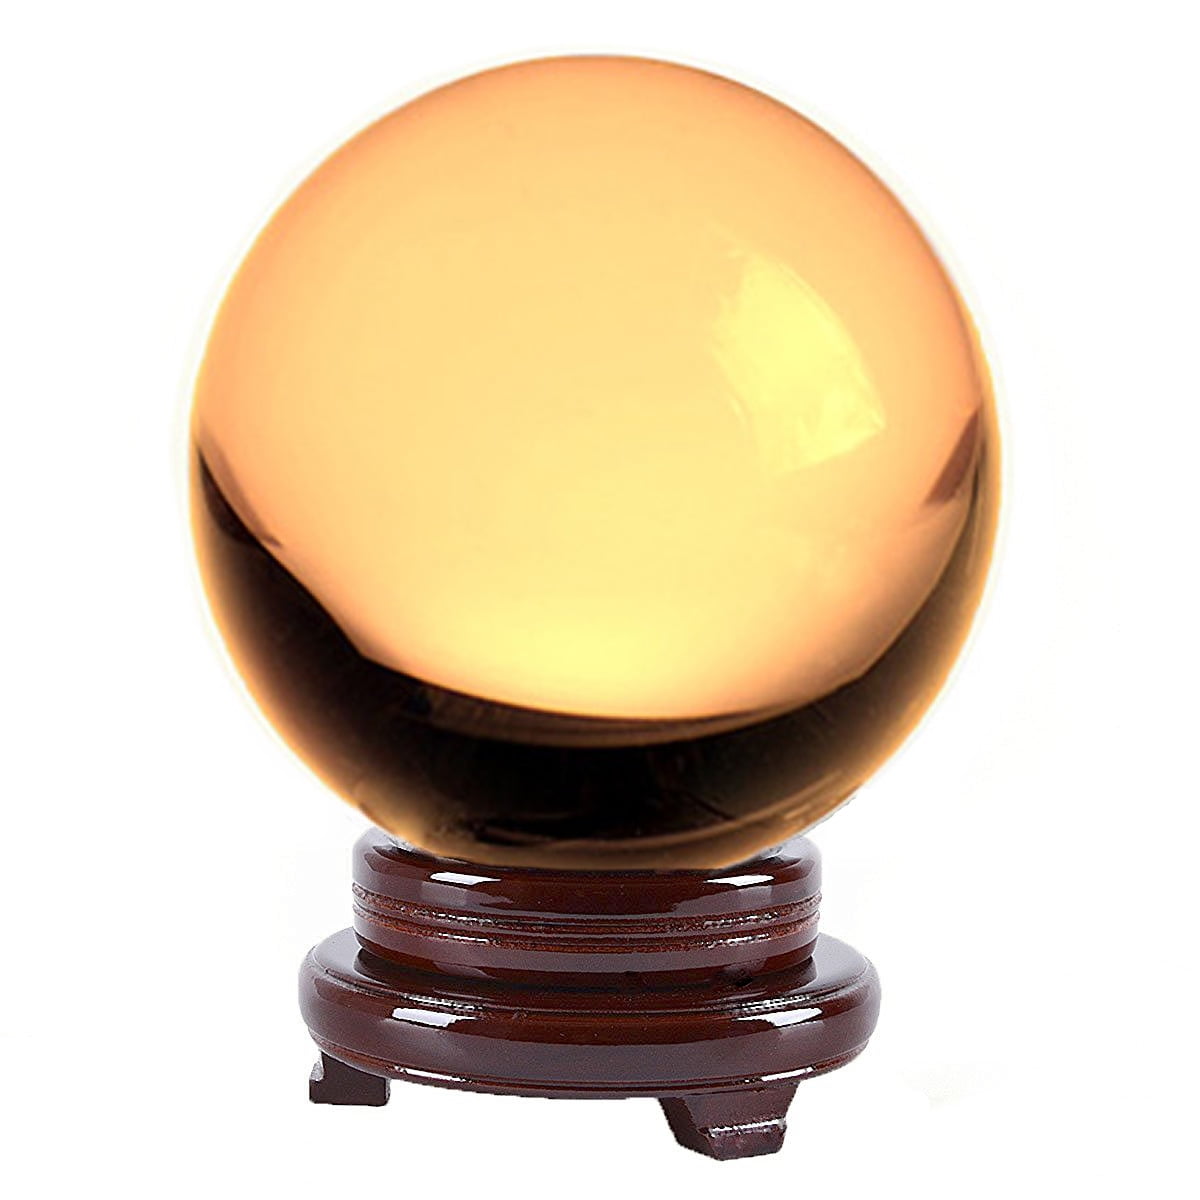 Amlong Crystal bola de cristal de 6 pulgadas /150mm) con base de madera.